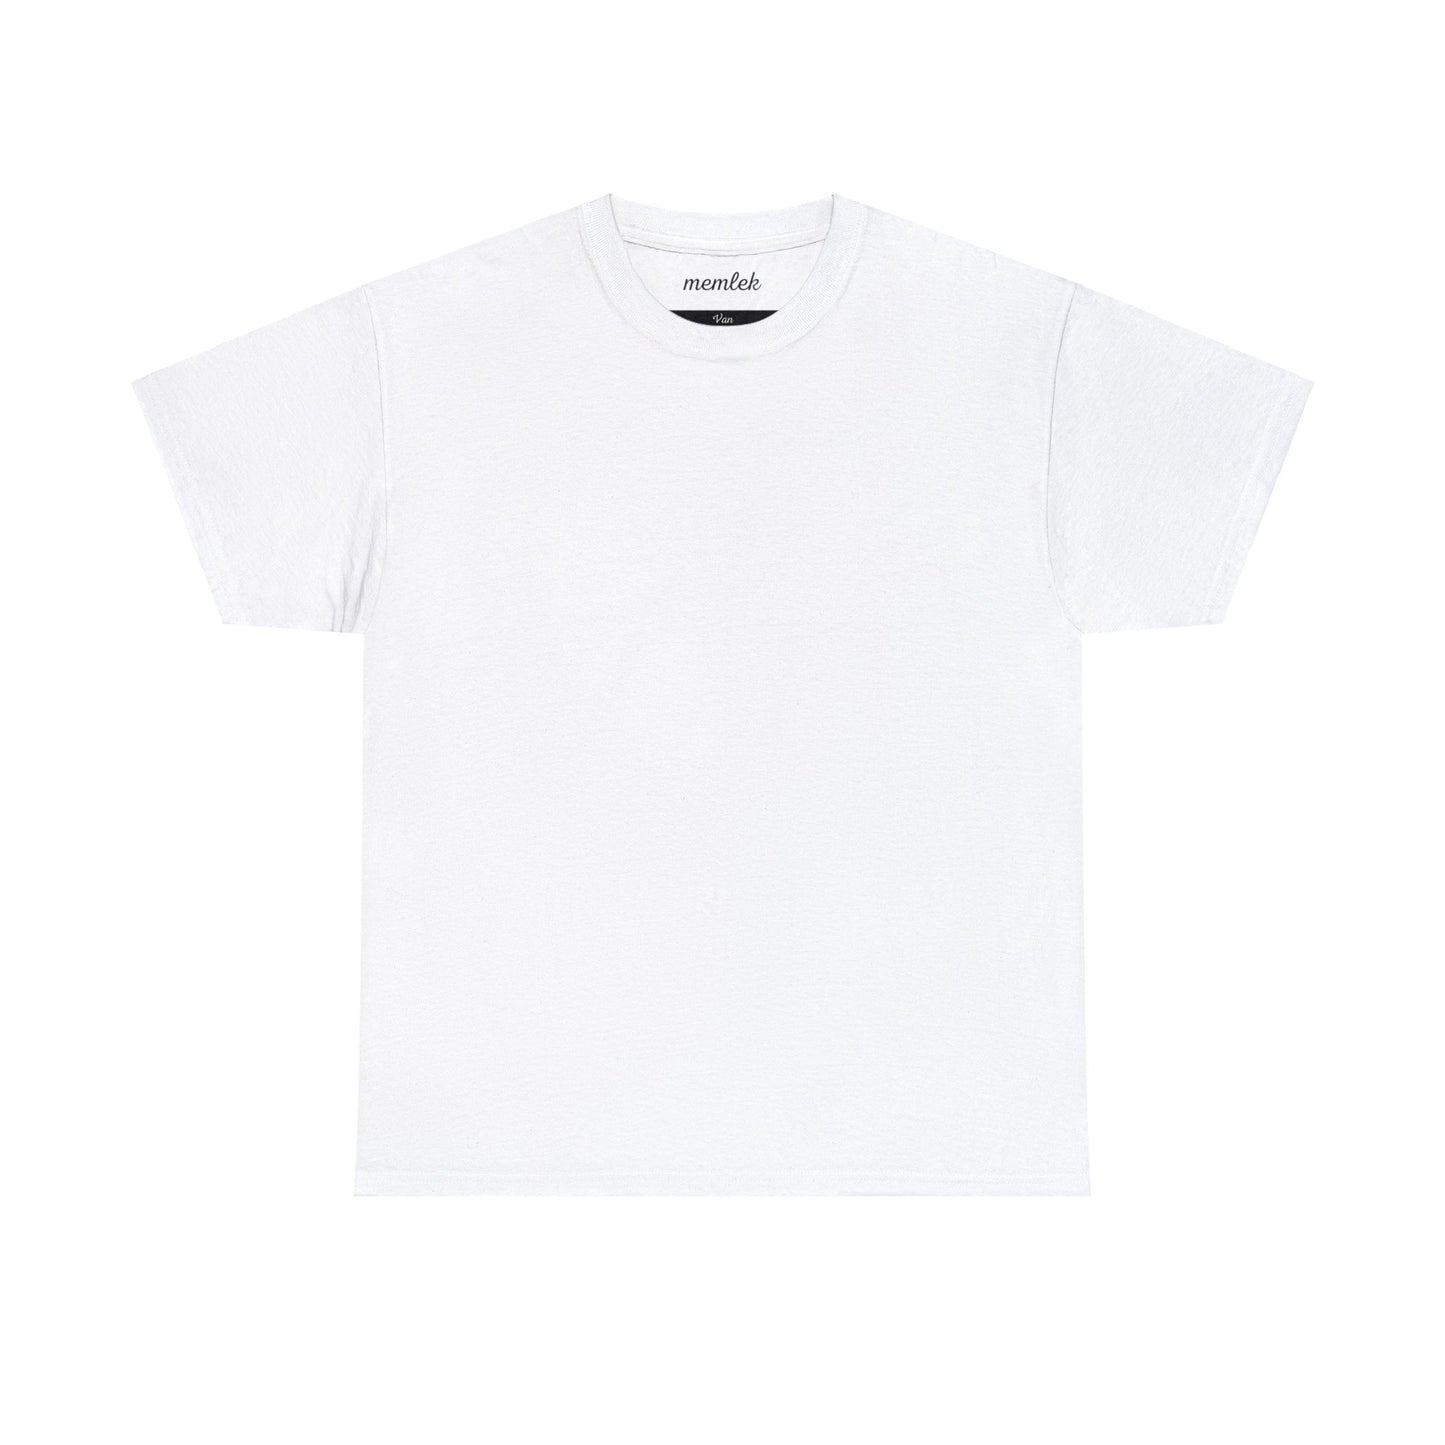 Kurt - 65 Van - T-Shirt - Back Print - Black/White